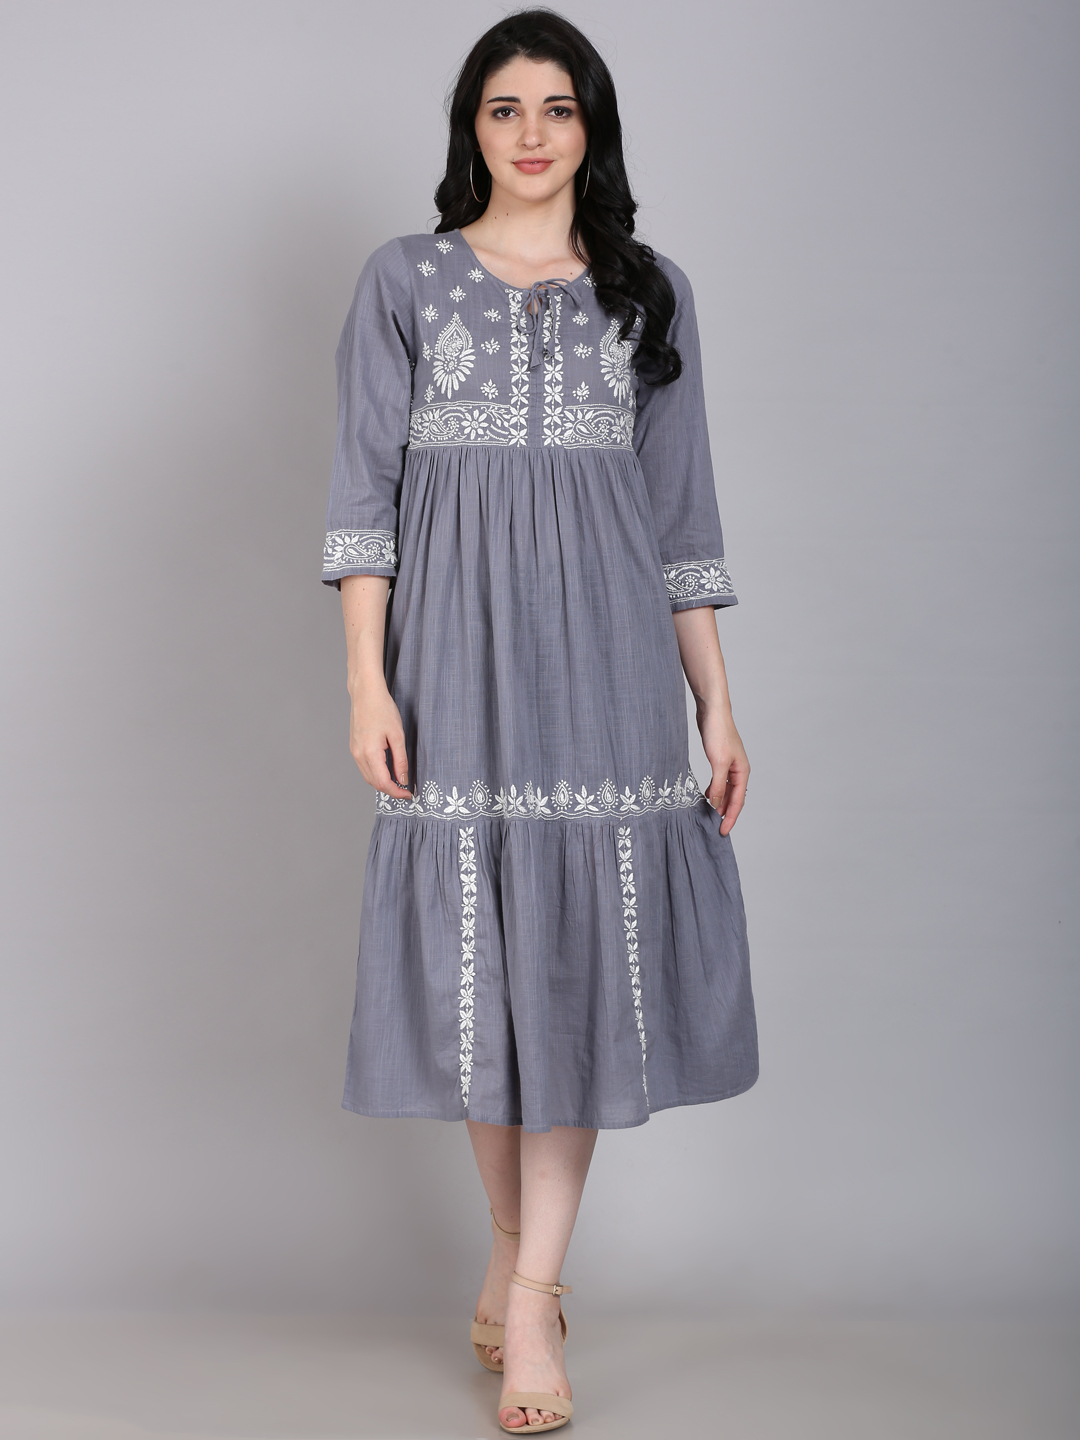 Lucknowi Chikankari Kurti | Hand-Embroidered Cotton Dress Material